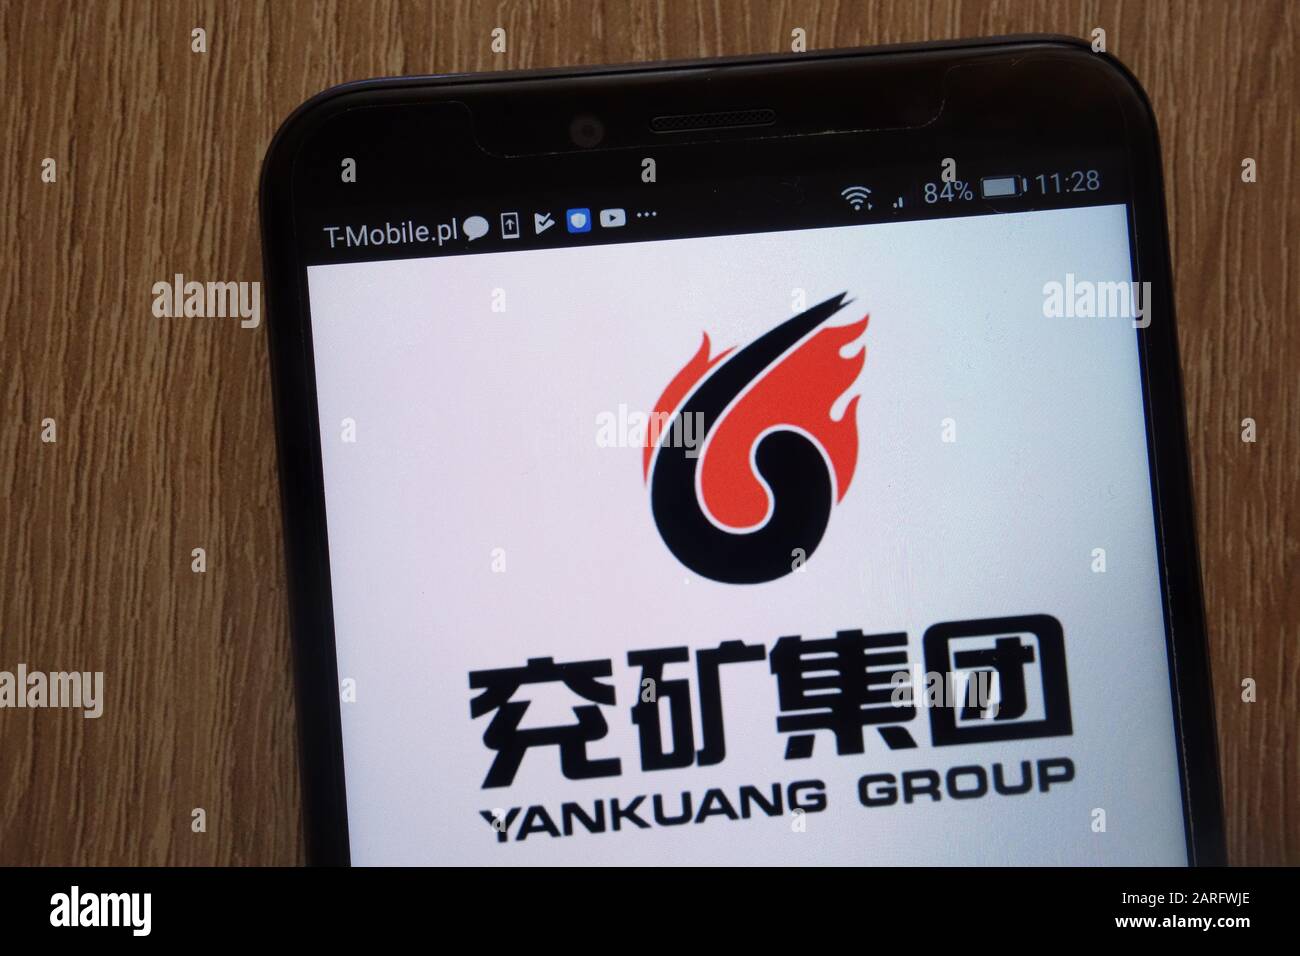 Yankuang Group logo displayed on a modern smartphone Stock Photo